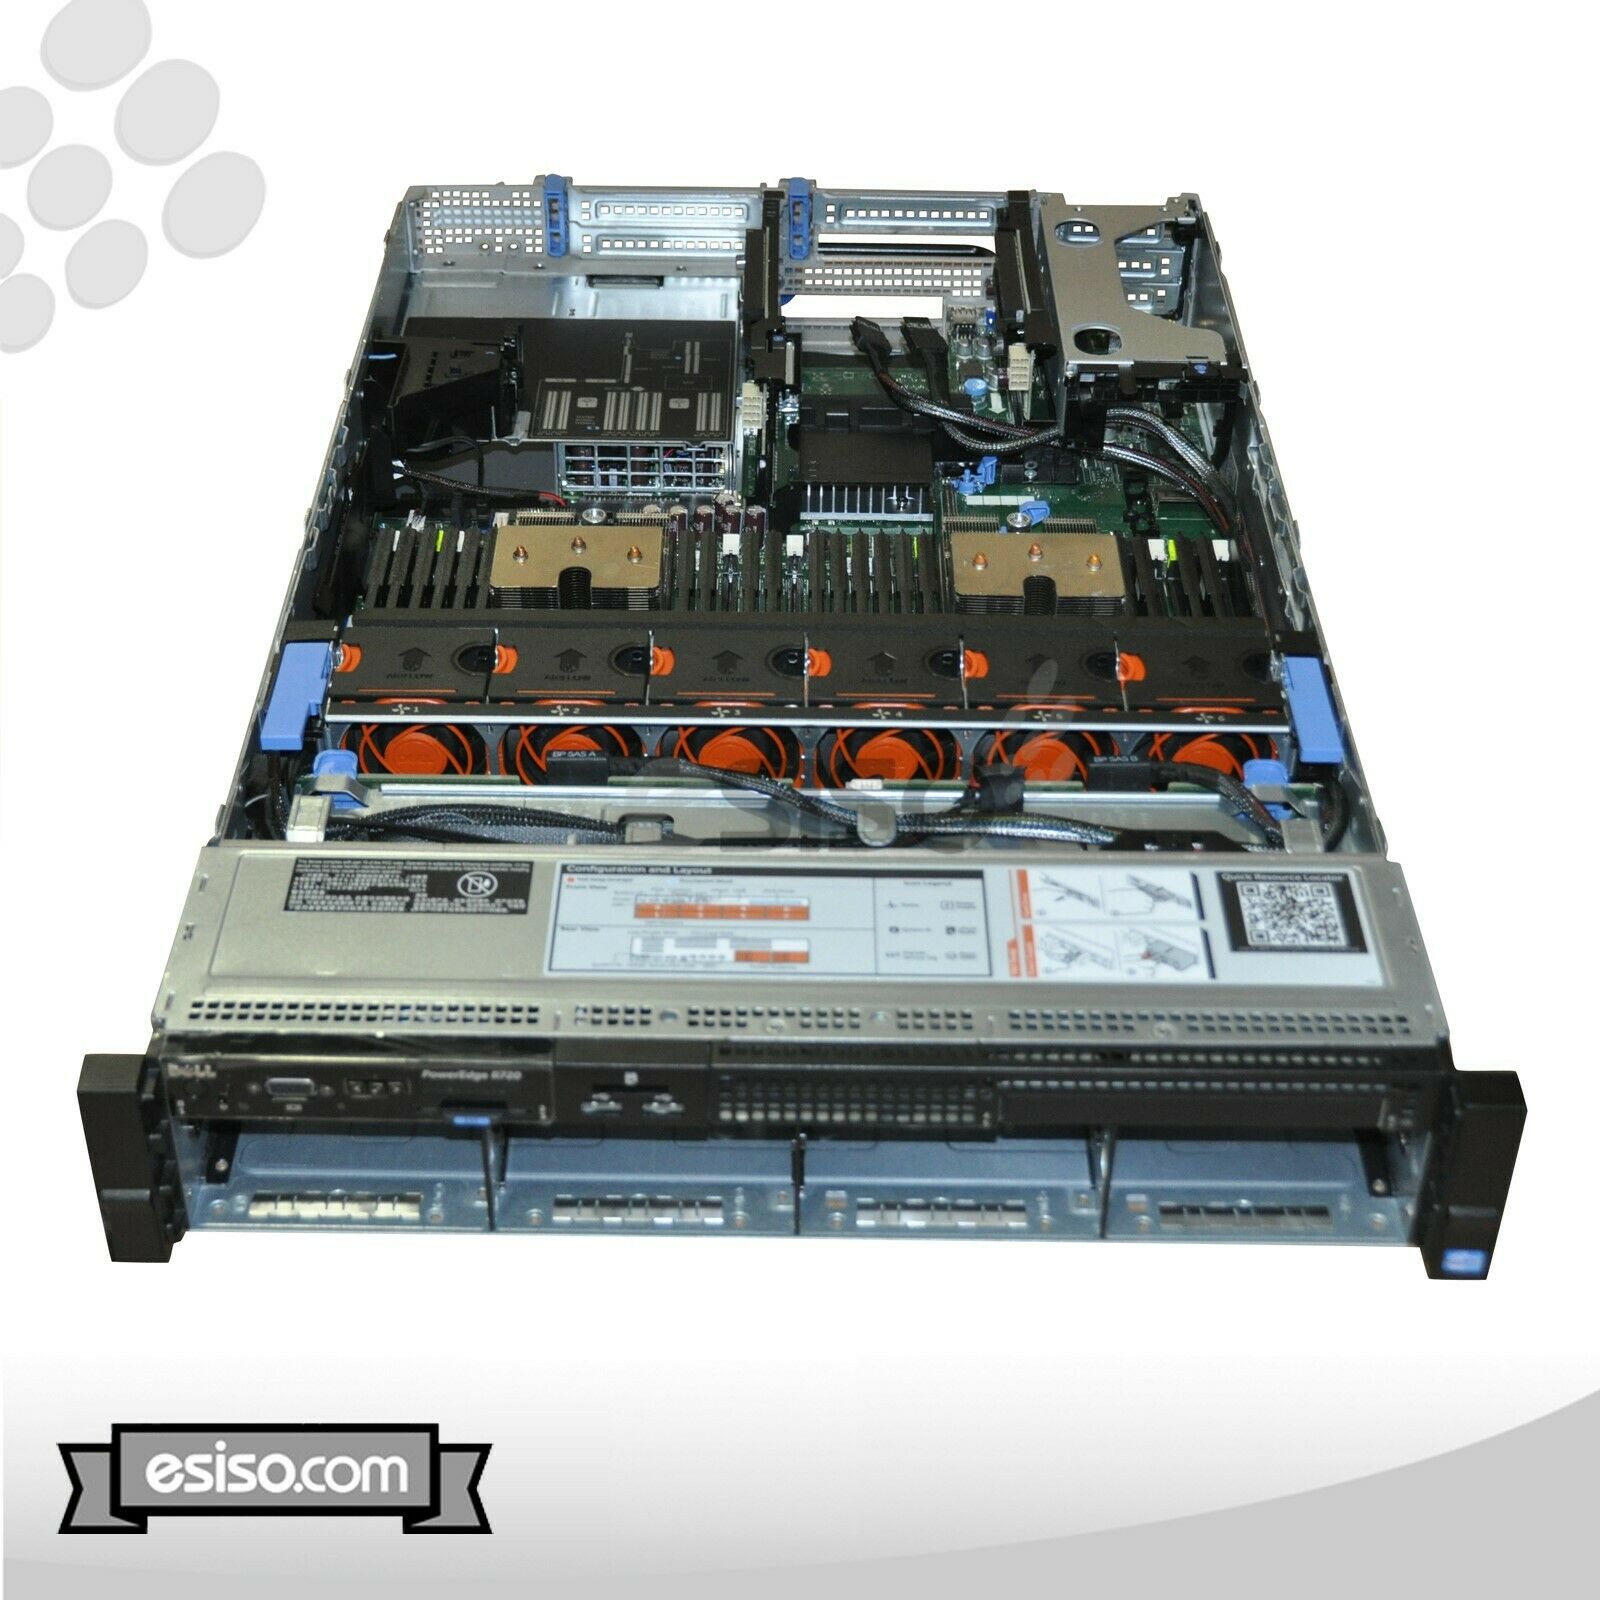 DELL POWEREDGE R720 8 LFF 2x 8 CORE E5-2660 2.2GHz 96GB RAM 8x 600GB 15K SAS H31